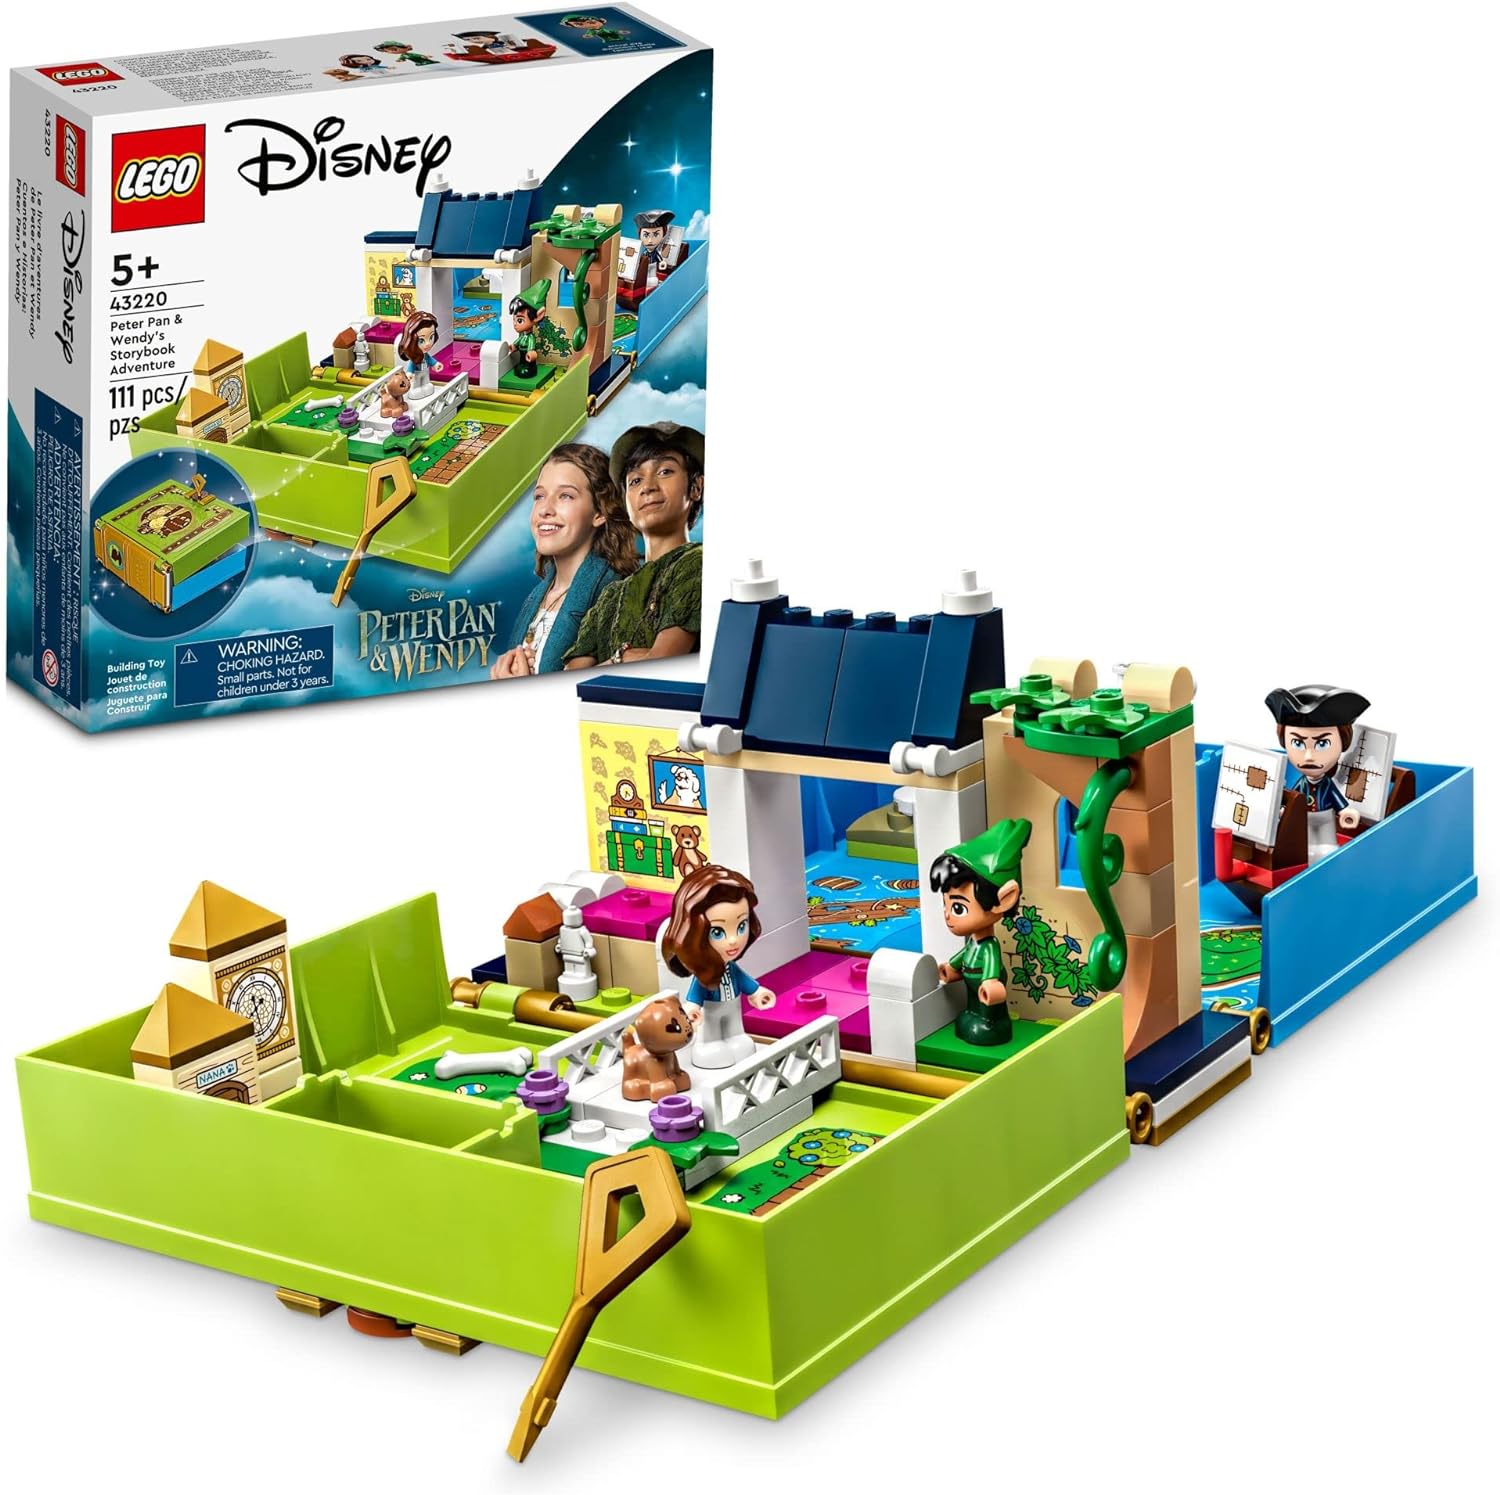 LEGO Disney Peter Pan & Wendy's Storybook Adventure Portable Playset $7.99 + Free S&H w/ Prime or $35+